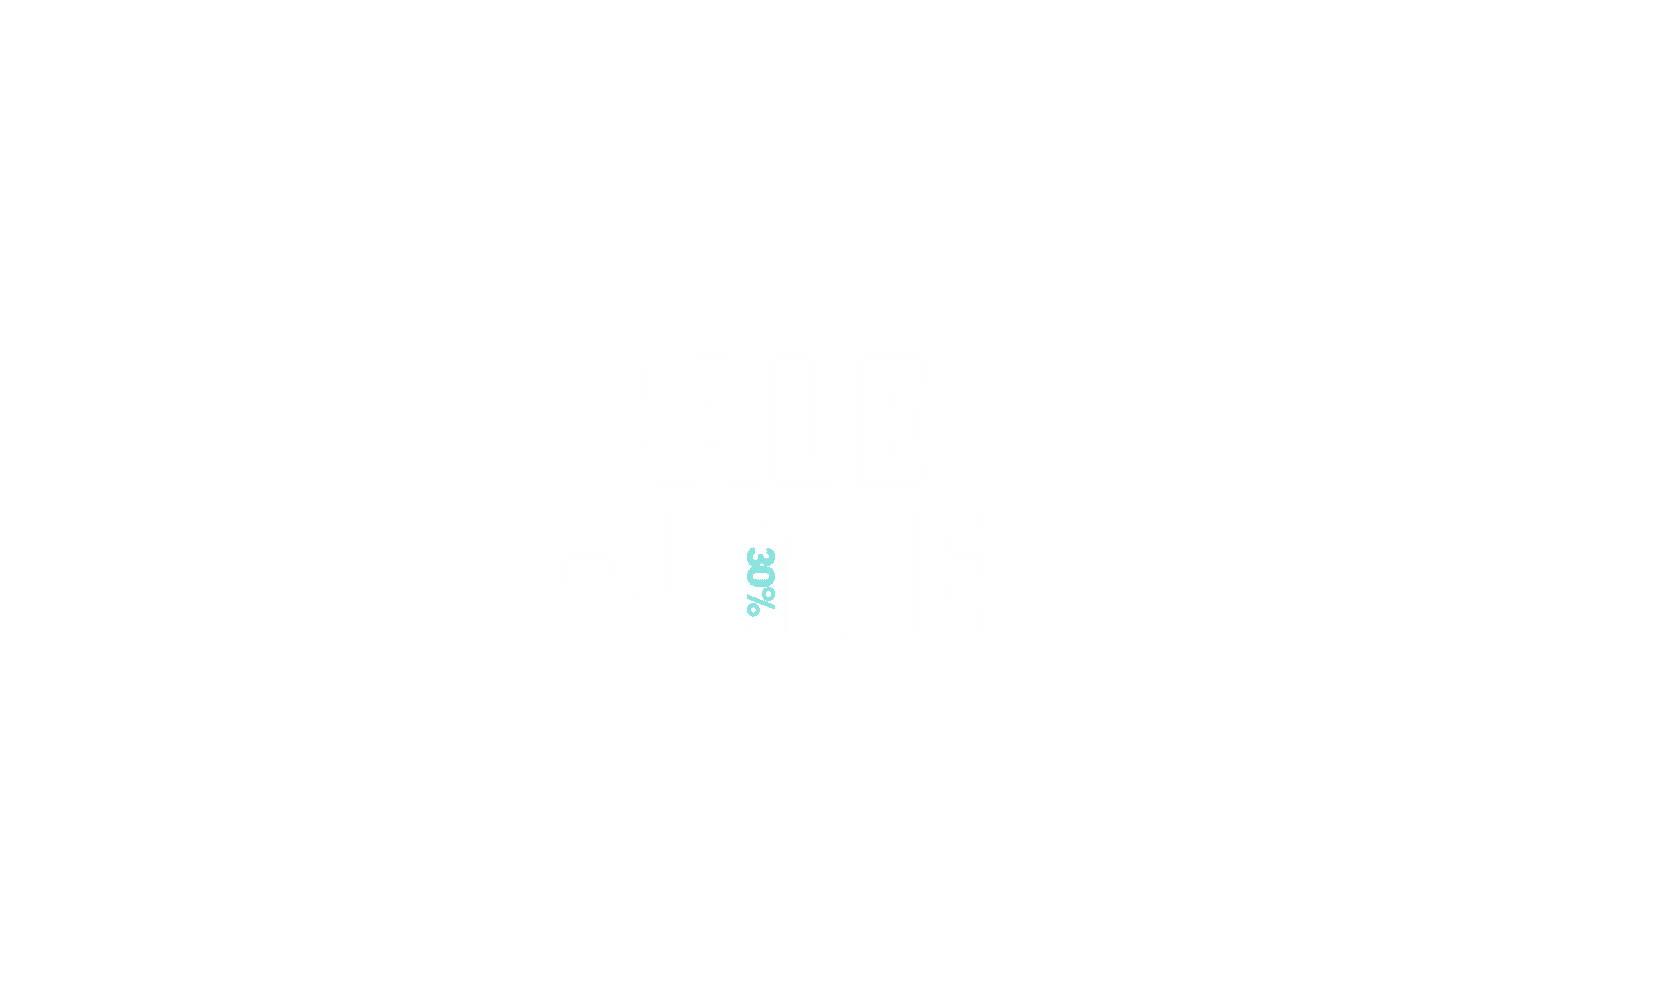 sale guide logo text